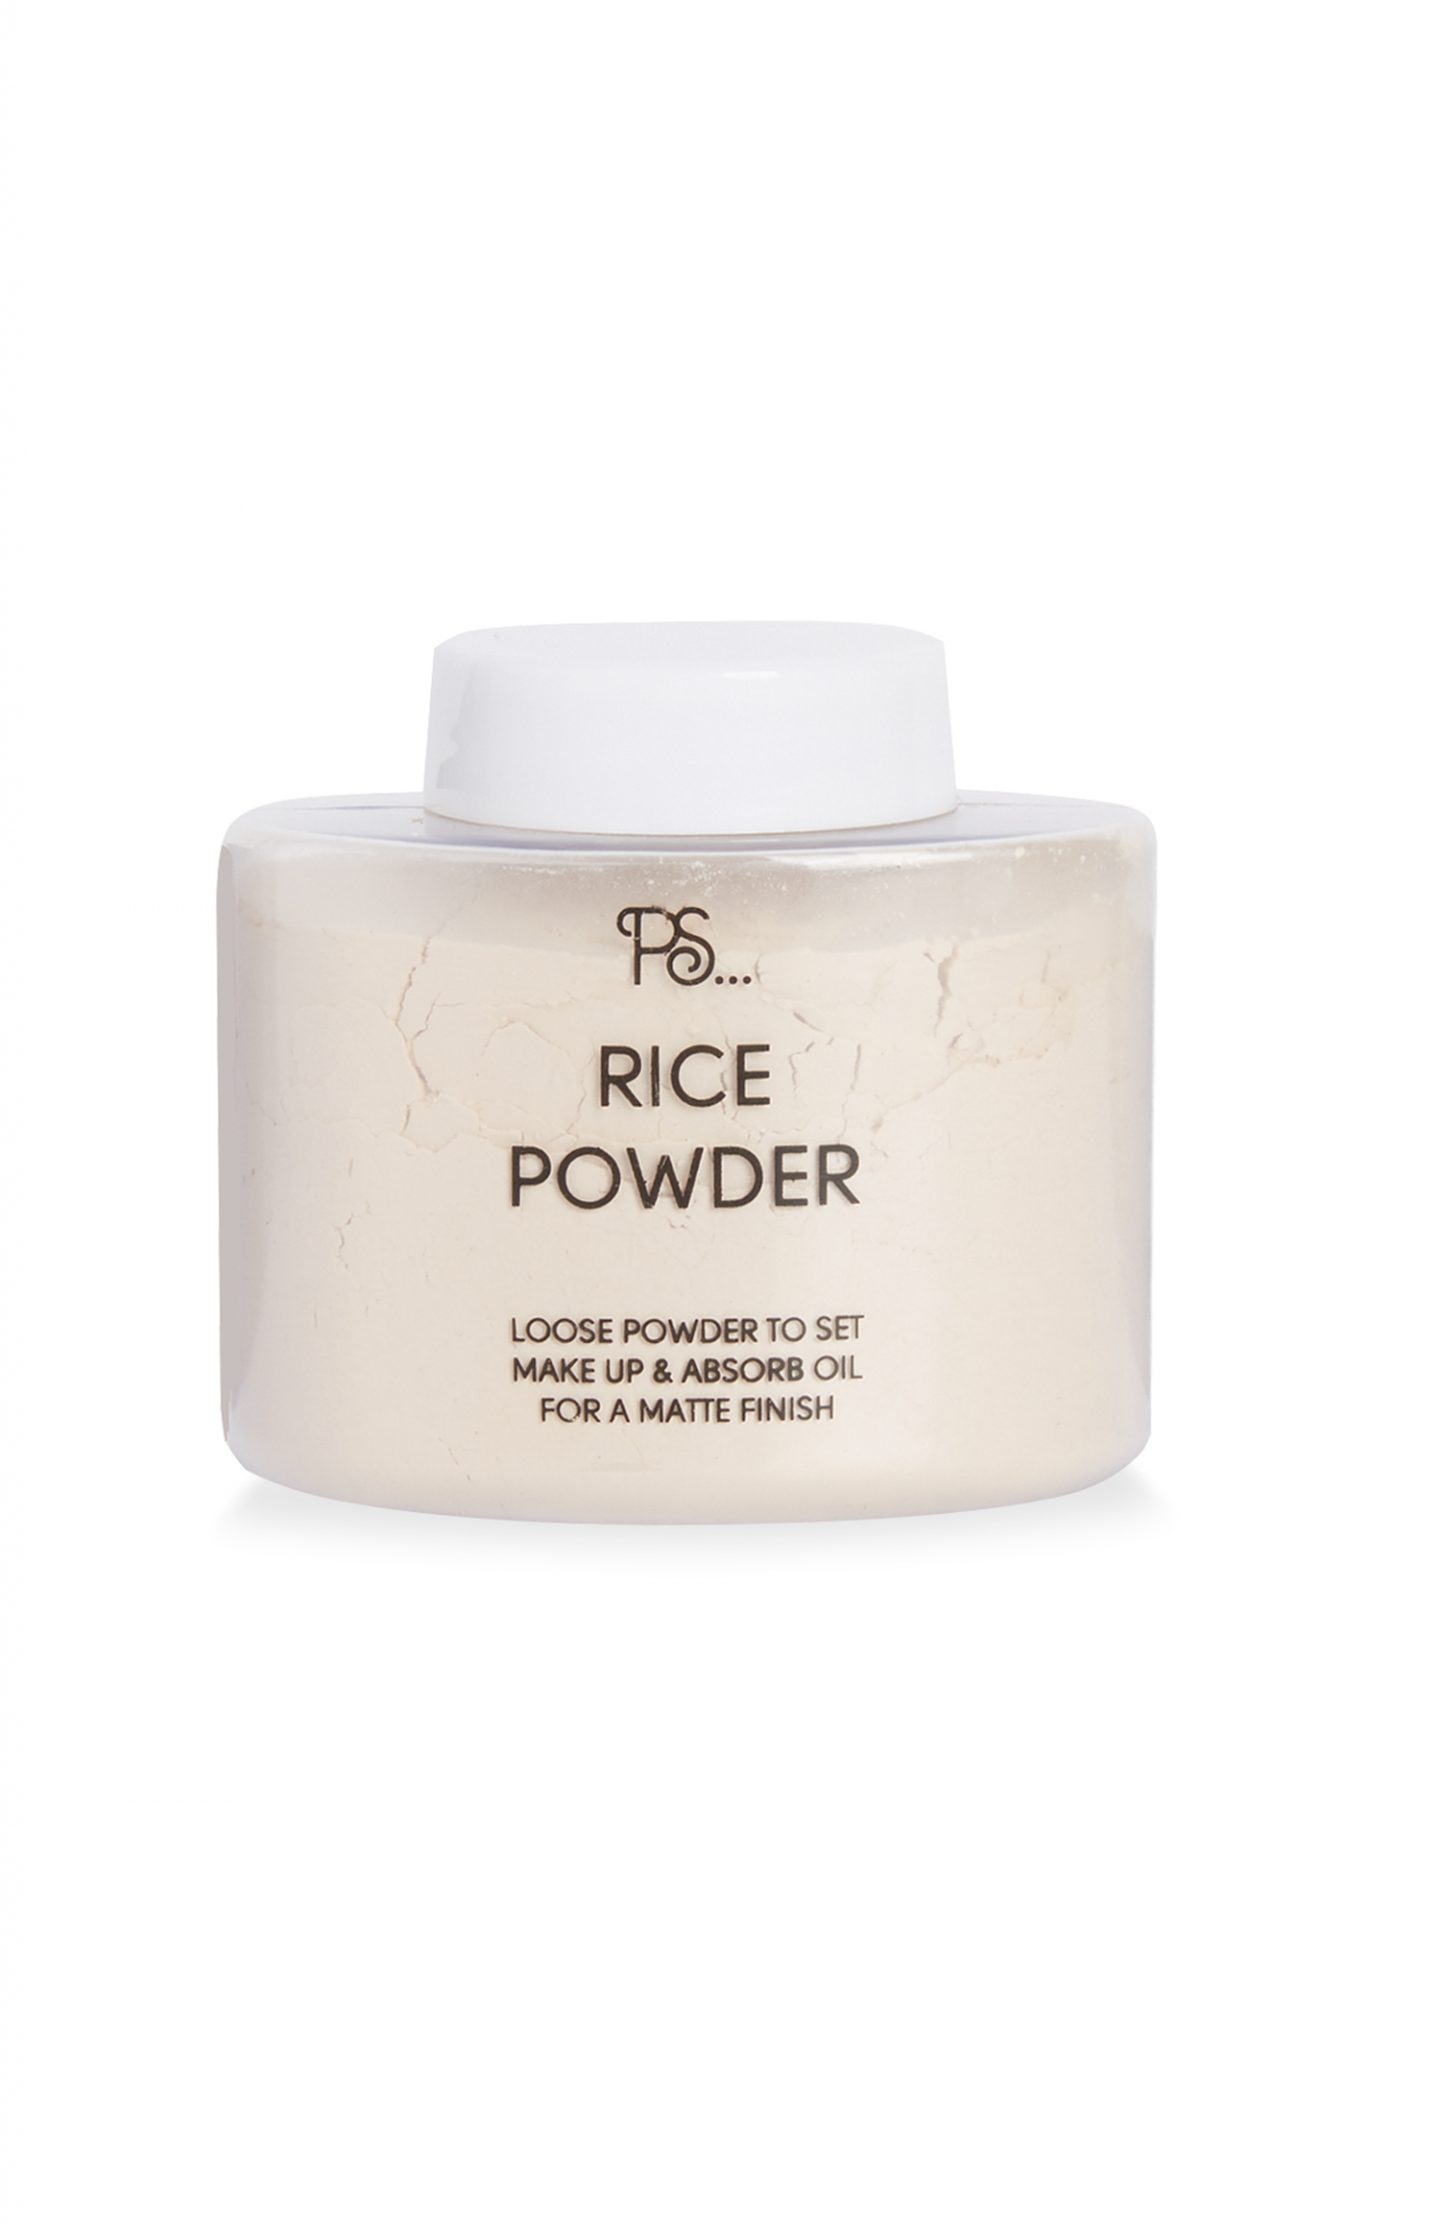 Primark Rice Powder €4